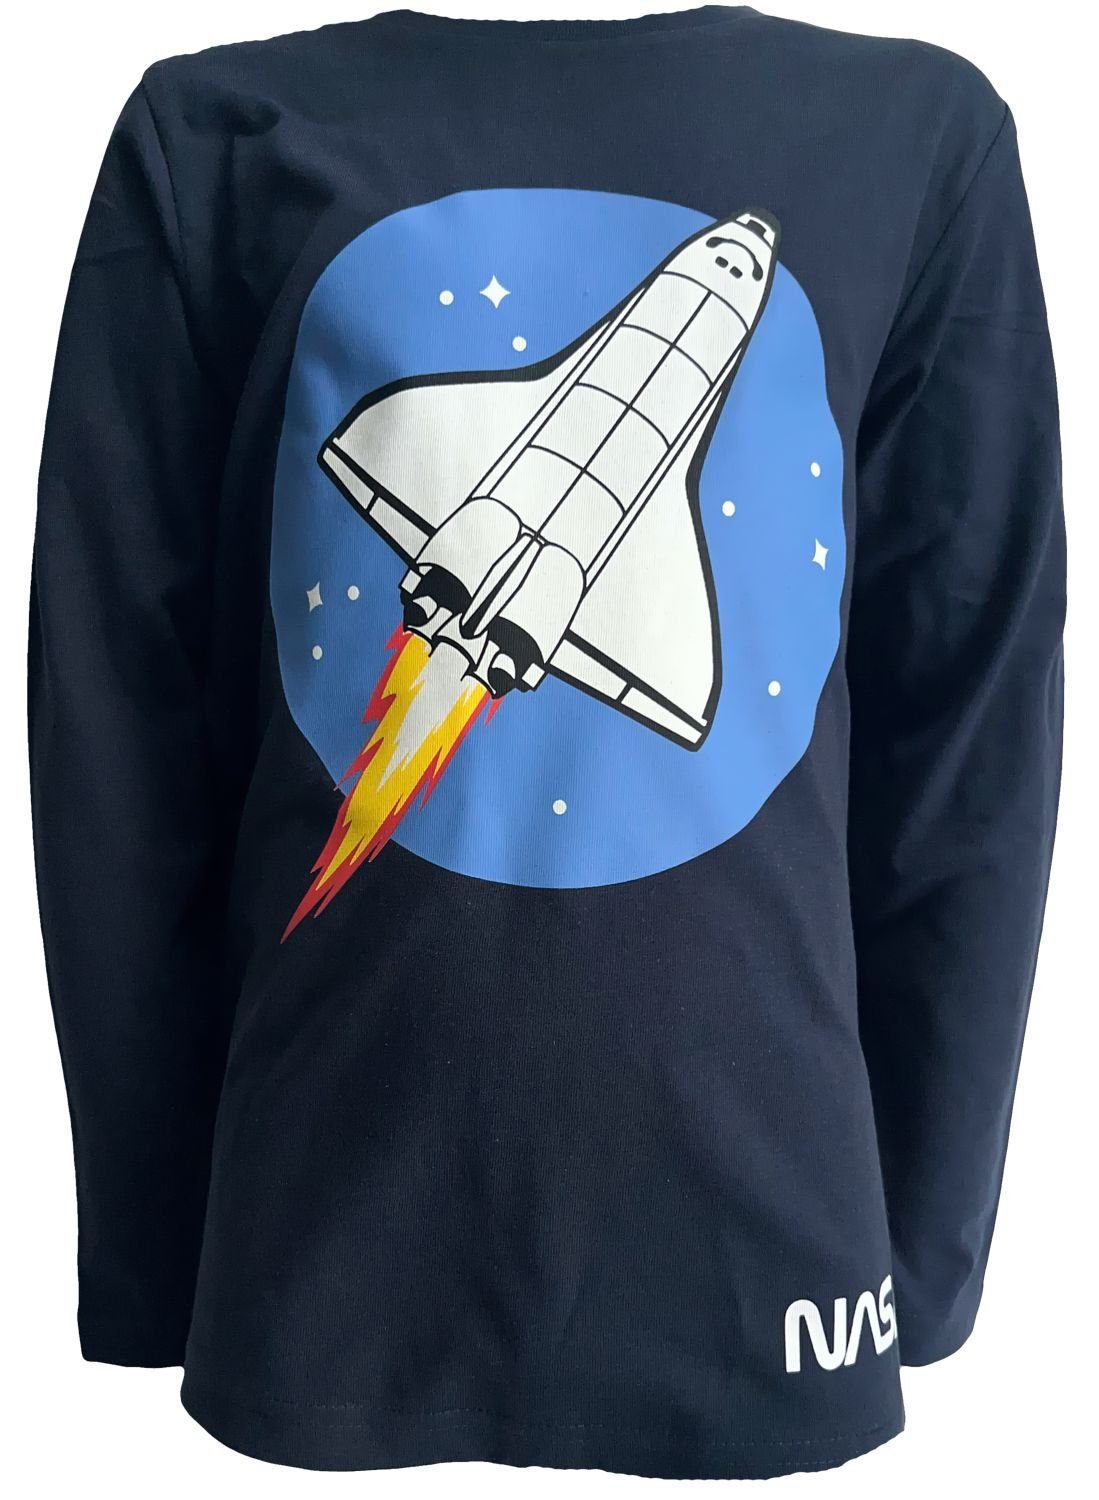 + Mädchen Langarmshirt NASA 2x NASA Jungen Druck Doppelpack Sweatshirt Logo Langarm T-Shirts NASA